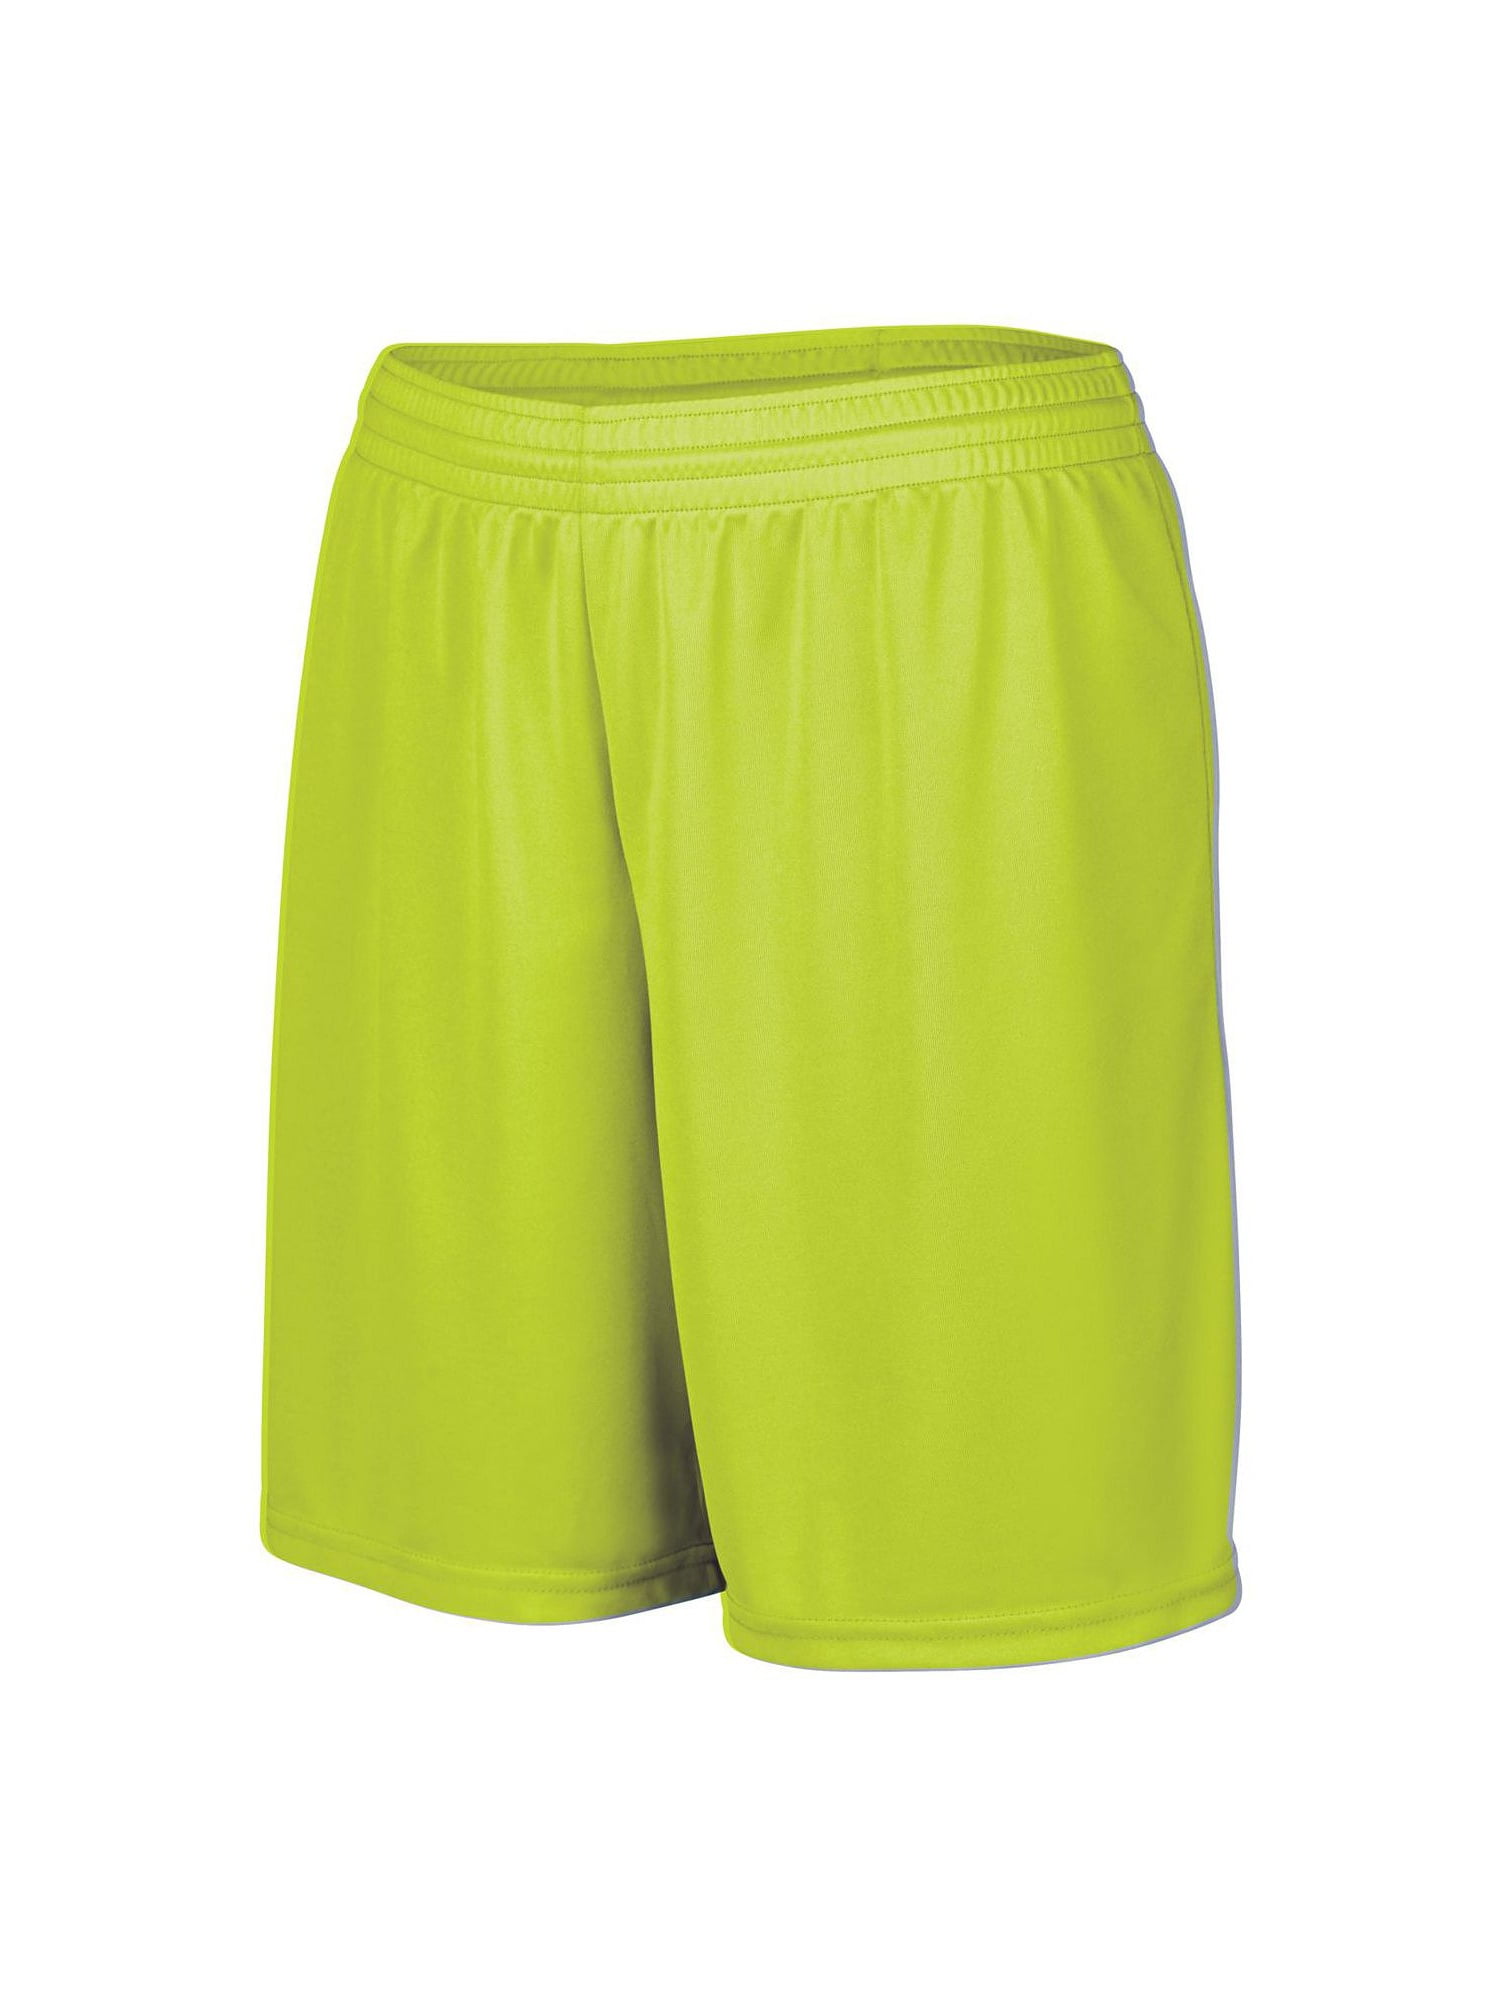 Augusta Ladies Octane Shorts 1423 Lime Xl - Walmart.com